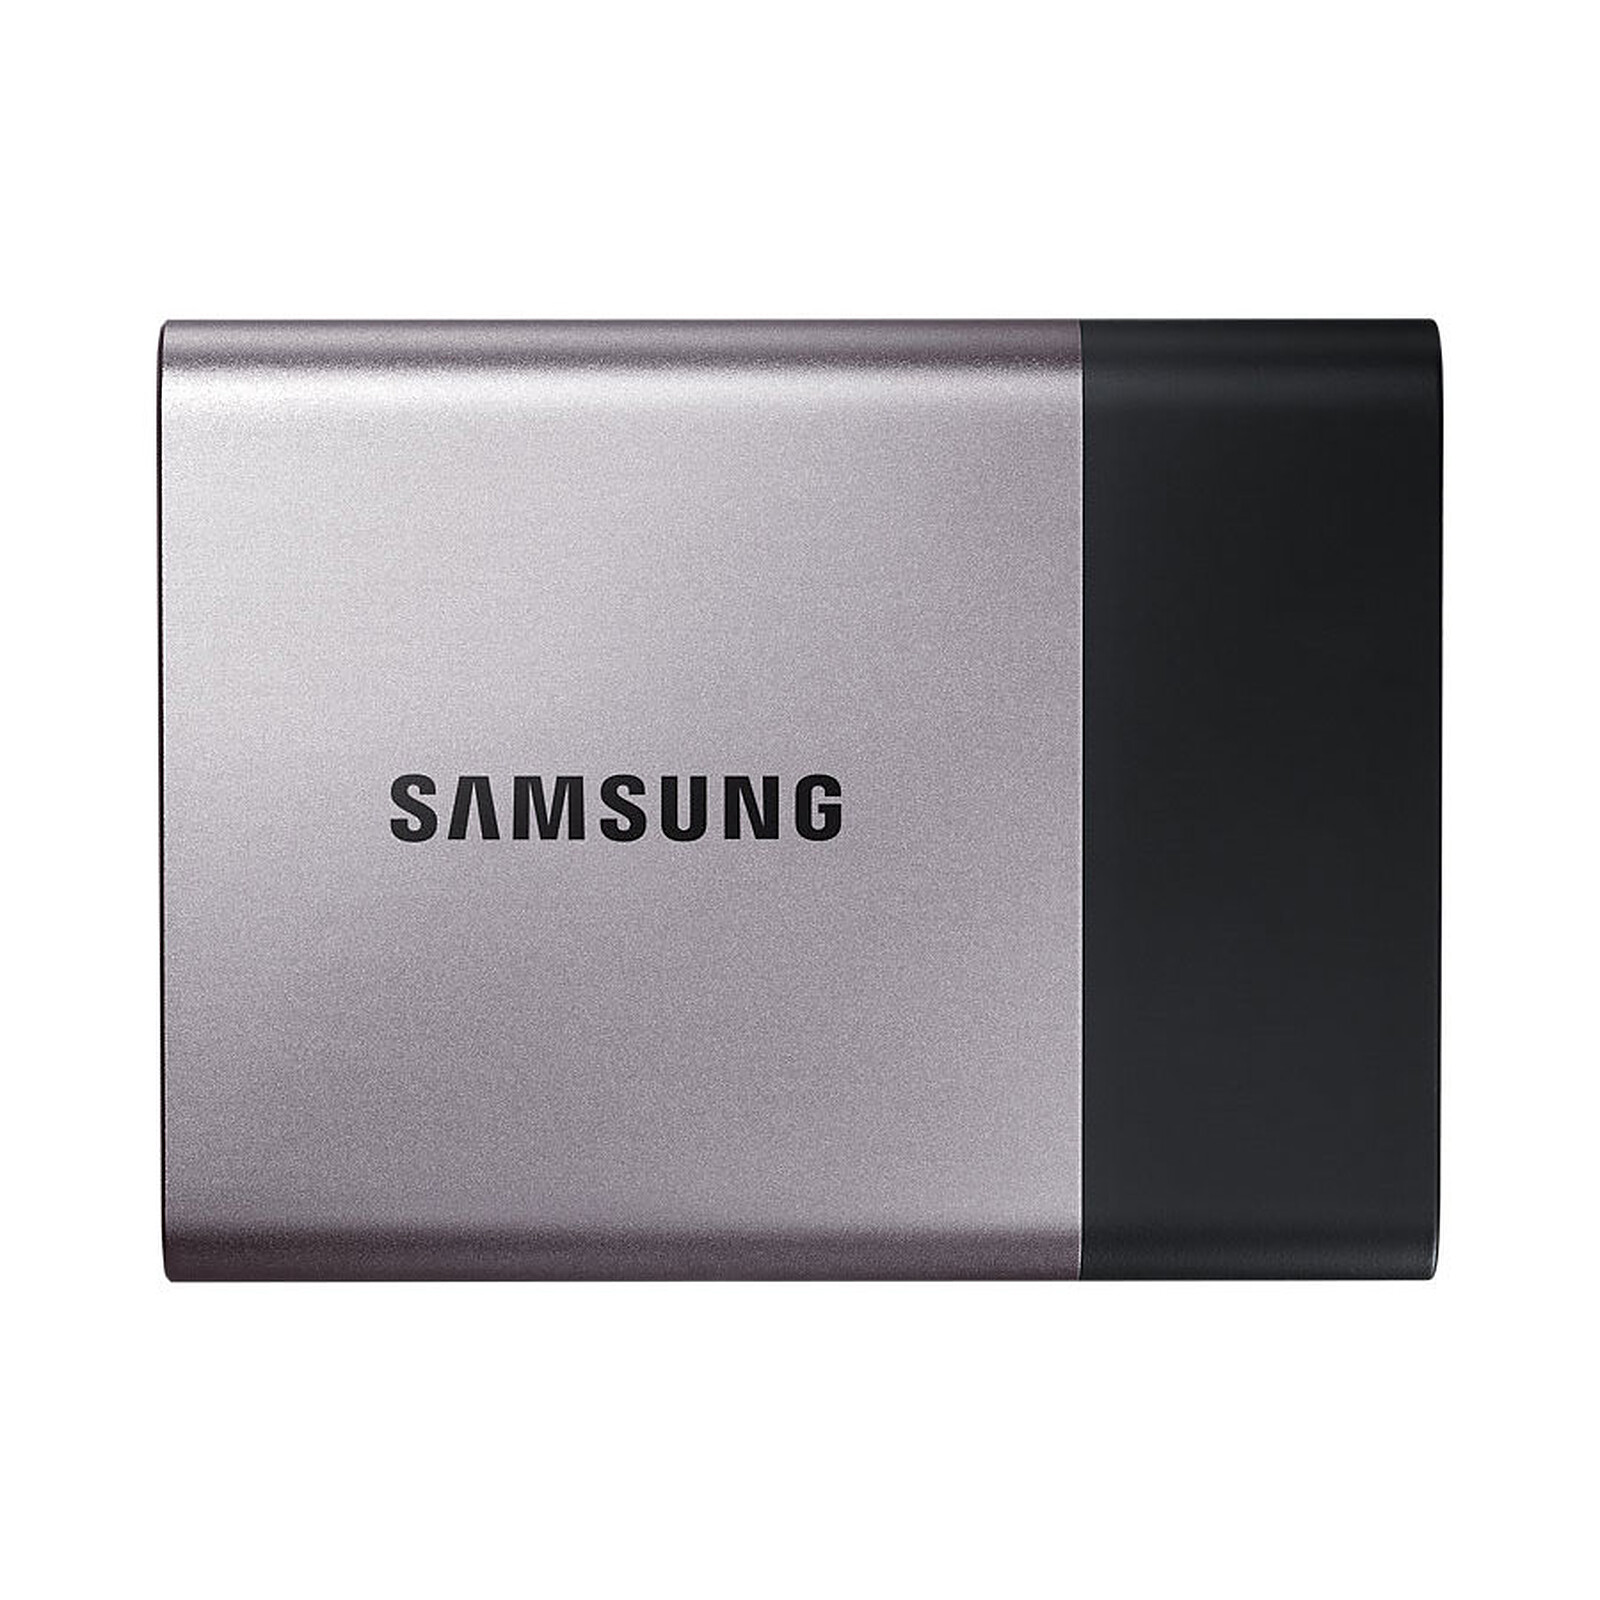 Samsung SSD Portable T3 - 500 Go - Disque dur externe - Garantie 3 ans LDLC